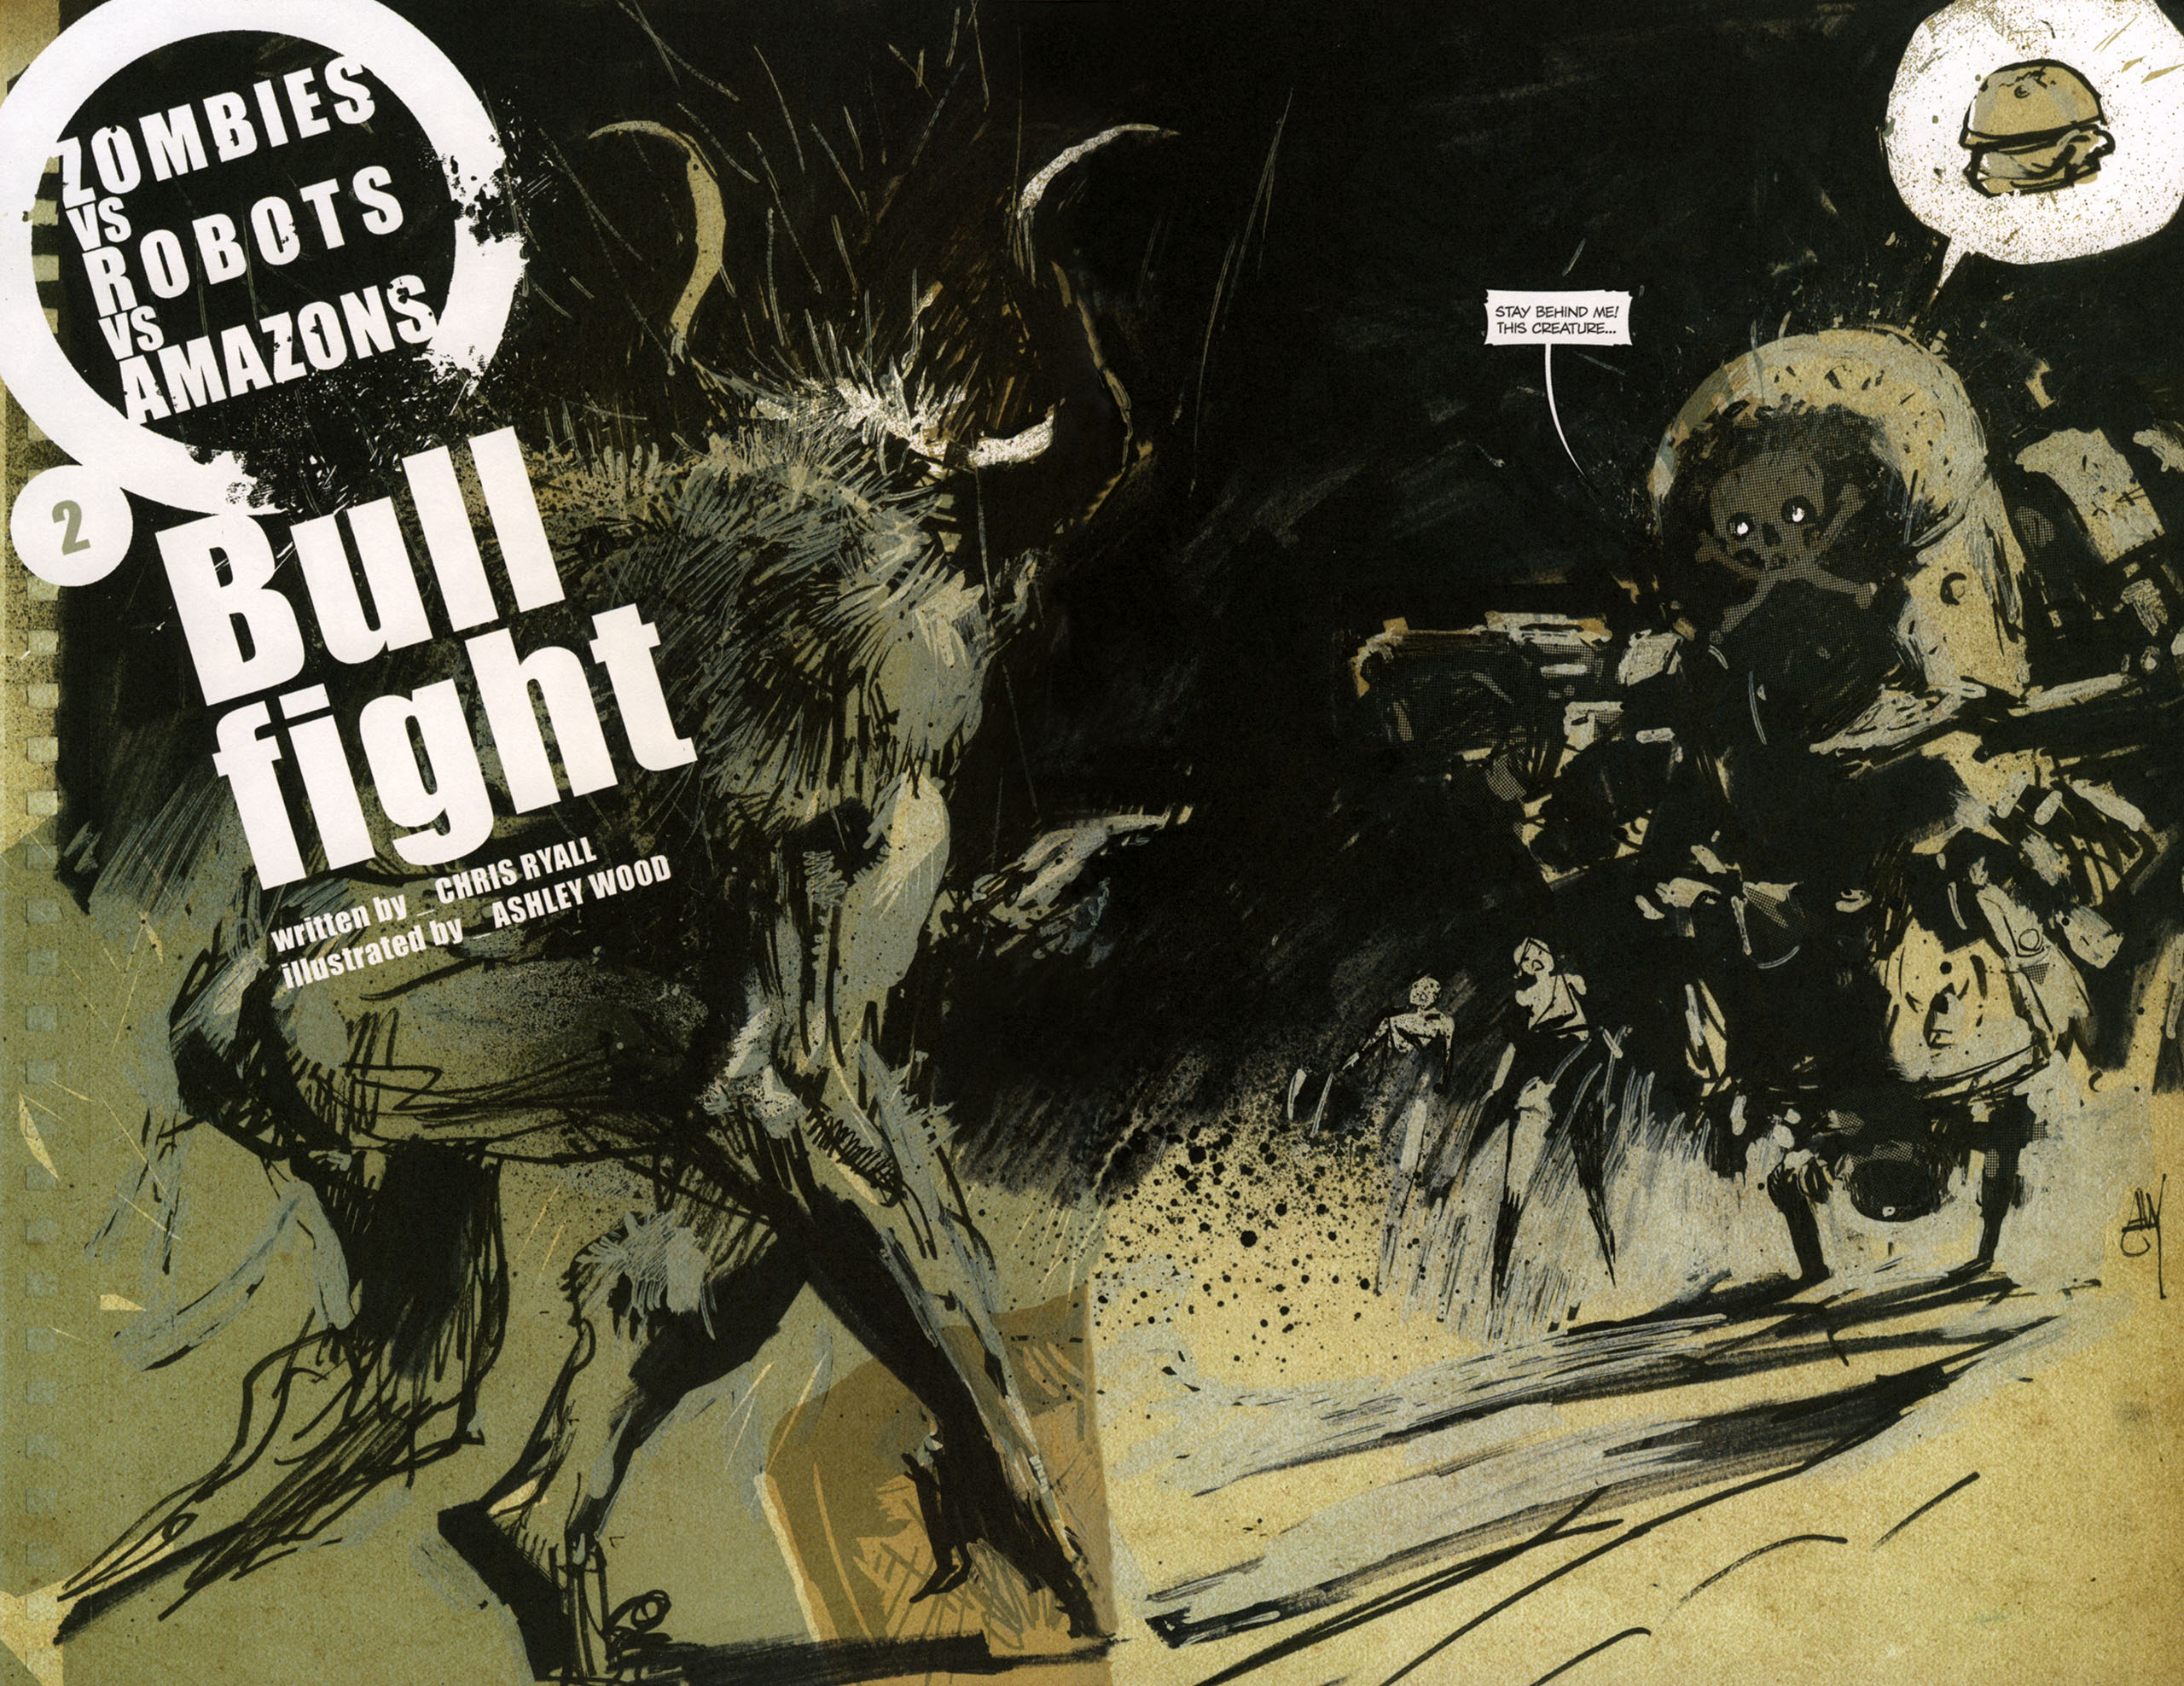 Read online Zombies vs. Robots vs. Amazons comic -  Issue #2 - 4